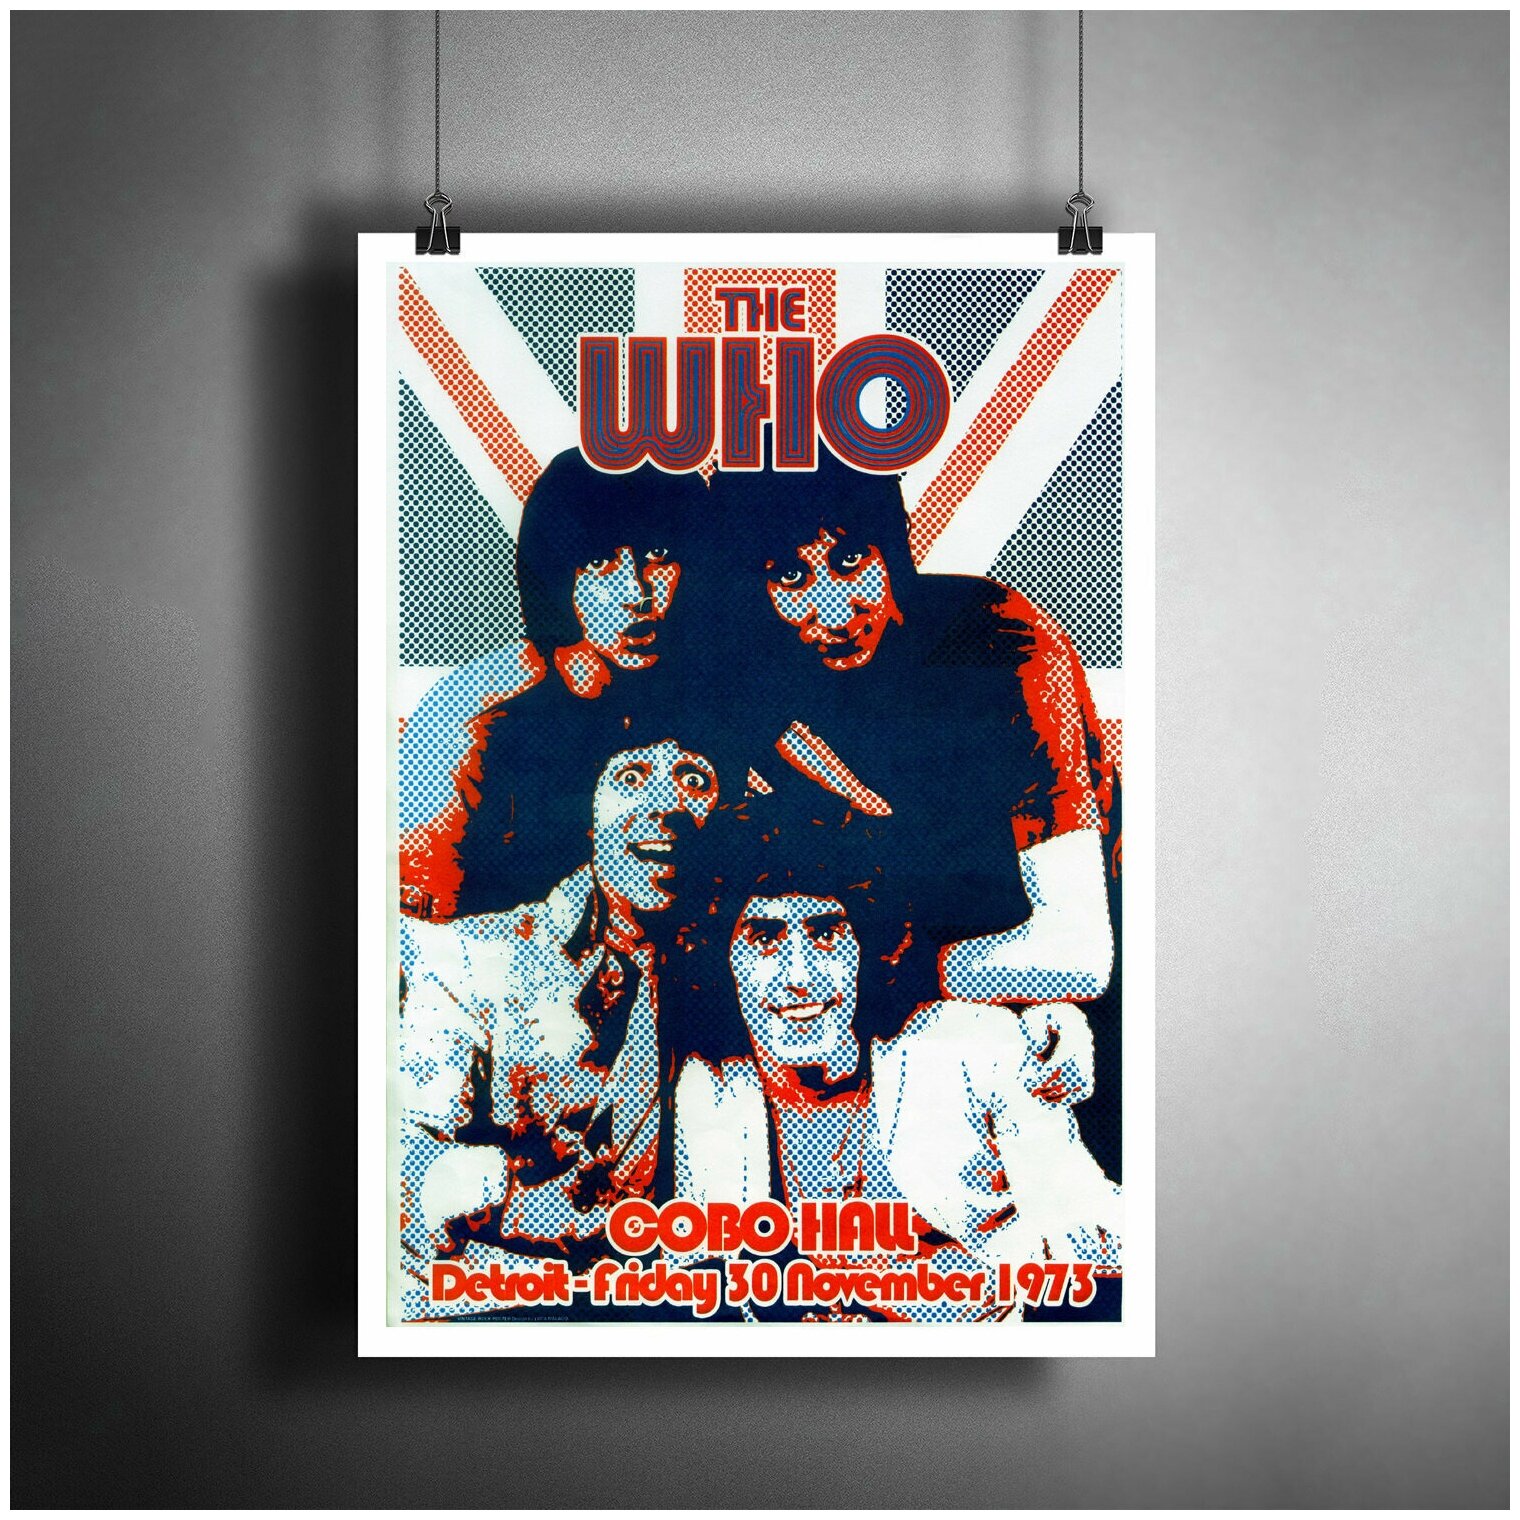 Постер плакат для интерьера "Музыка: Британская рок-группа The Who" / Декор дома, офиса, комнаты, квартиры A3 (297 x 420 мм)